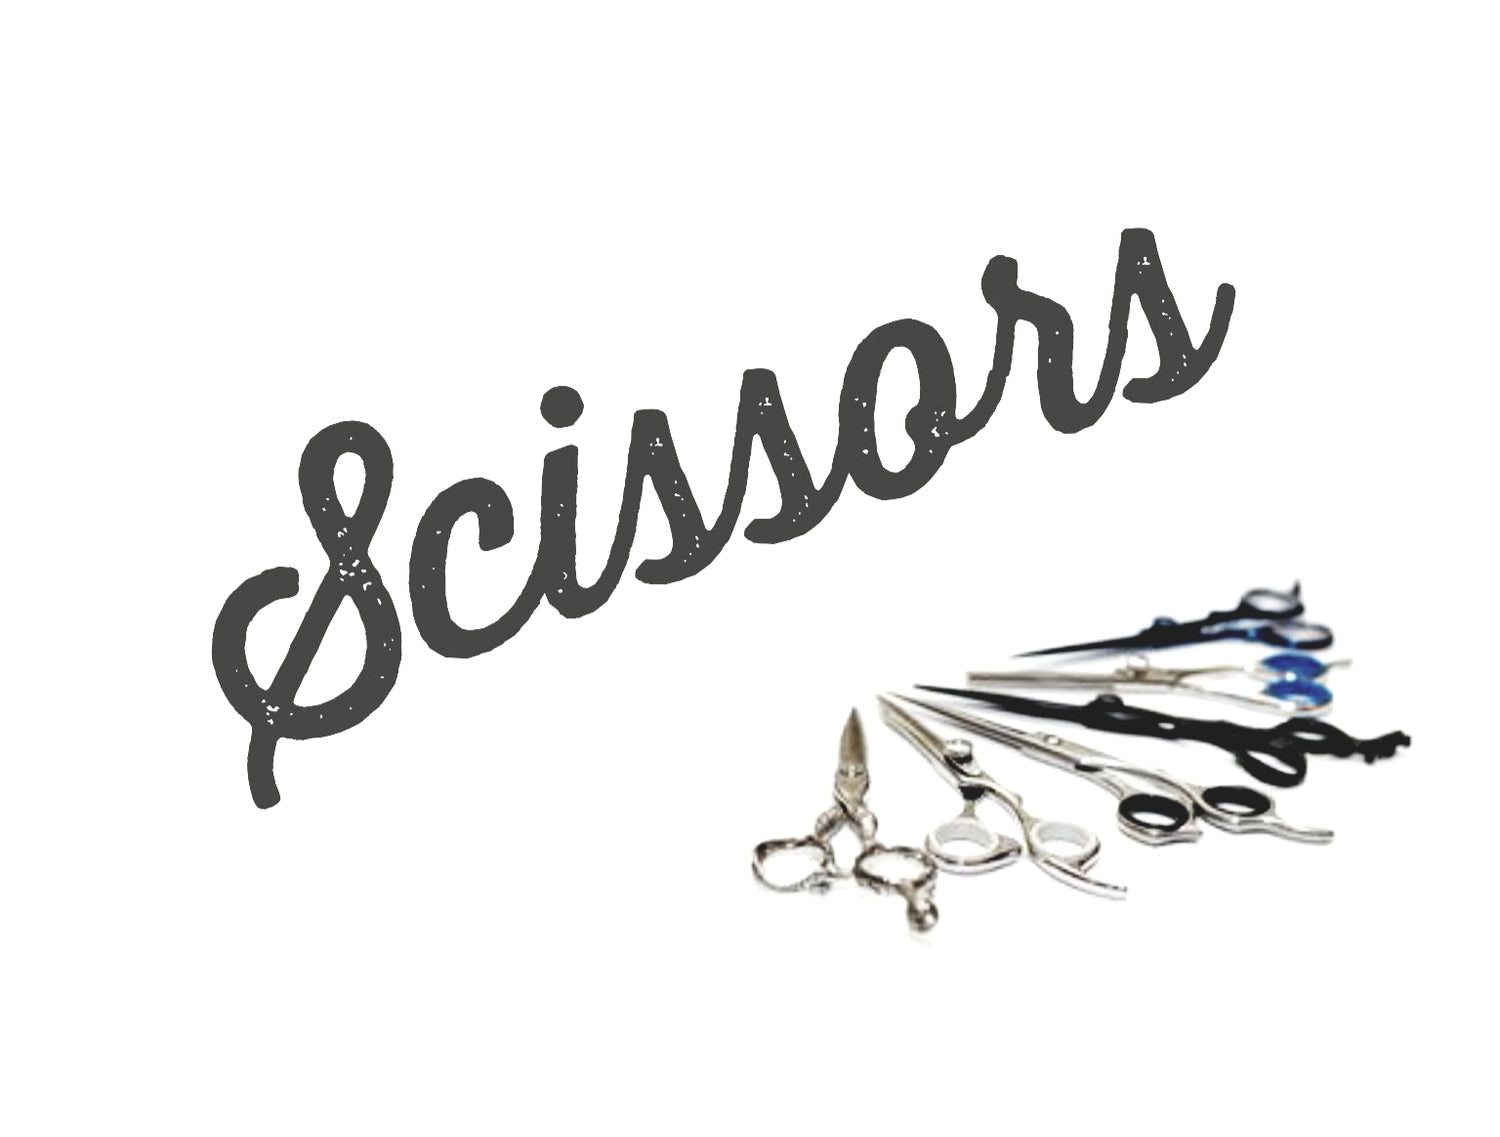 Scissors & Rotary Cutters